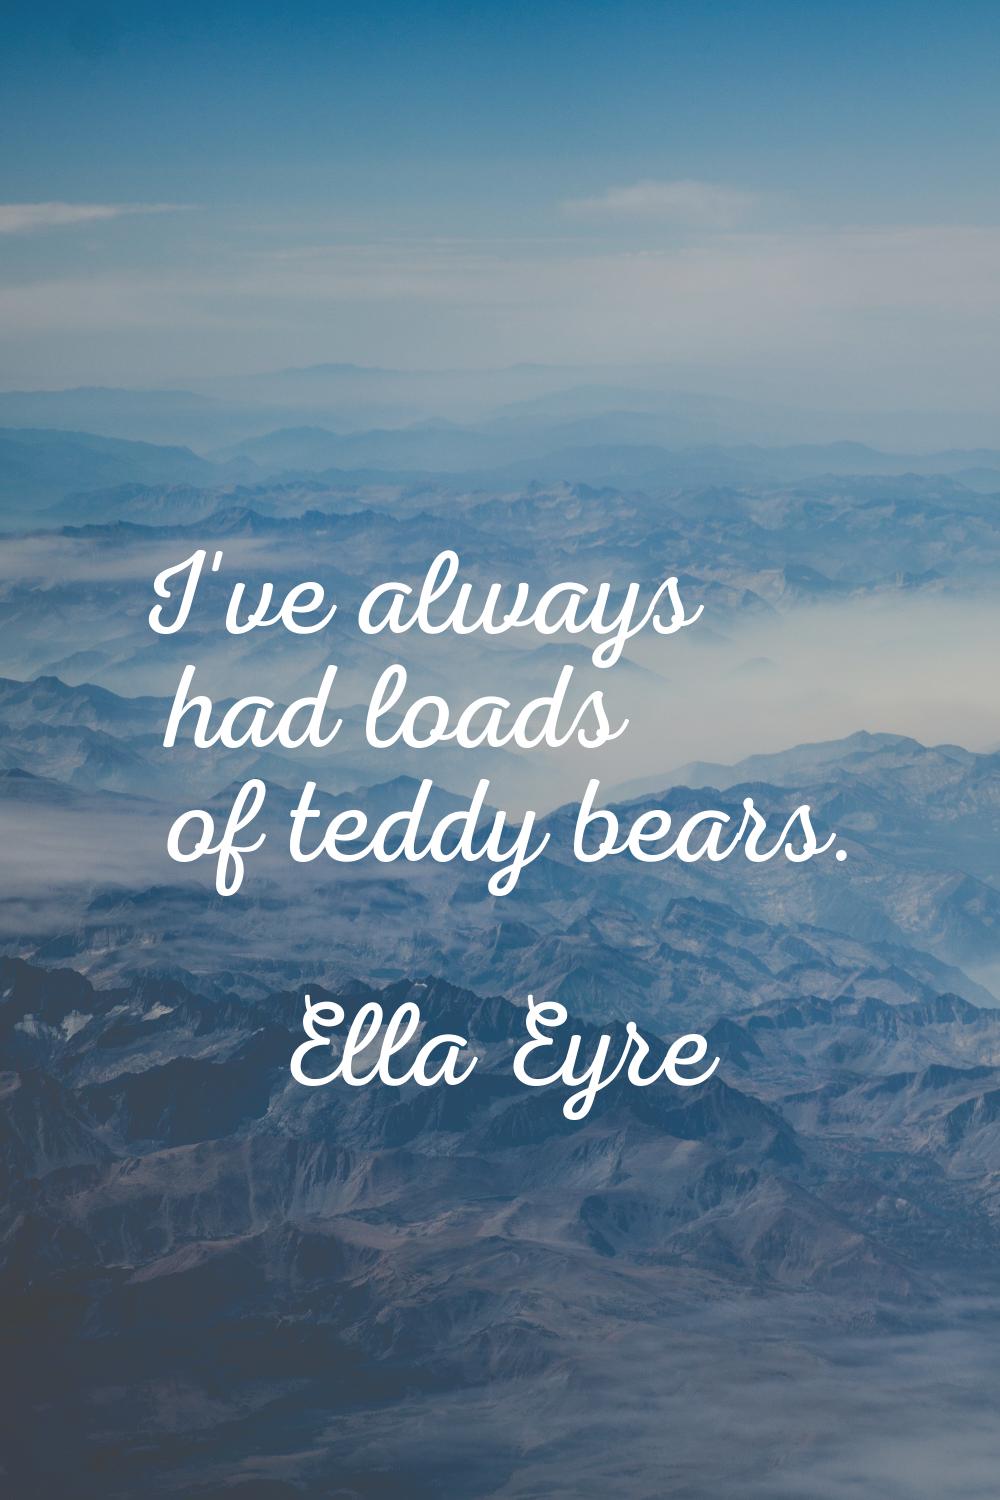 I've always had loads of teddy bears.